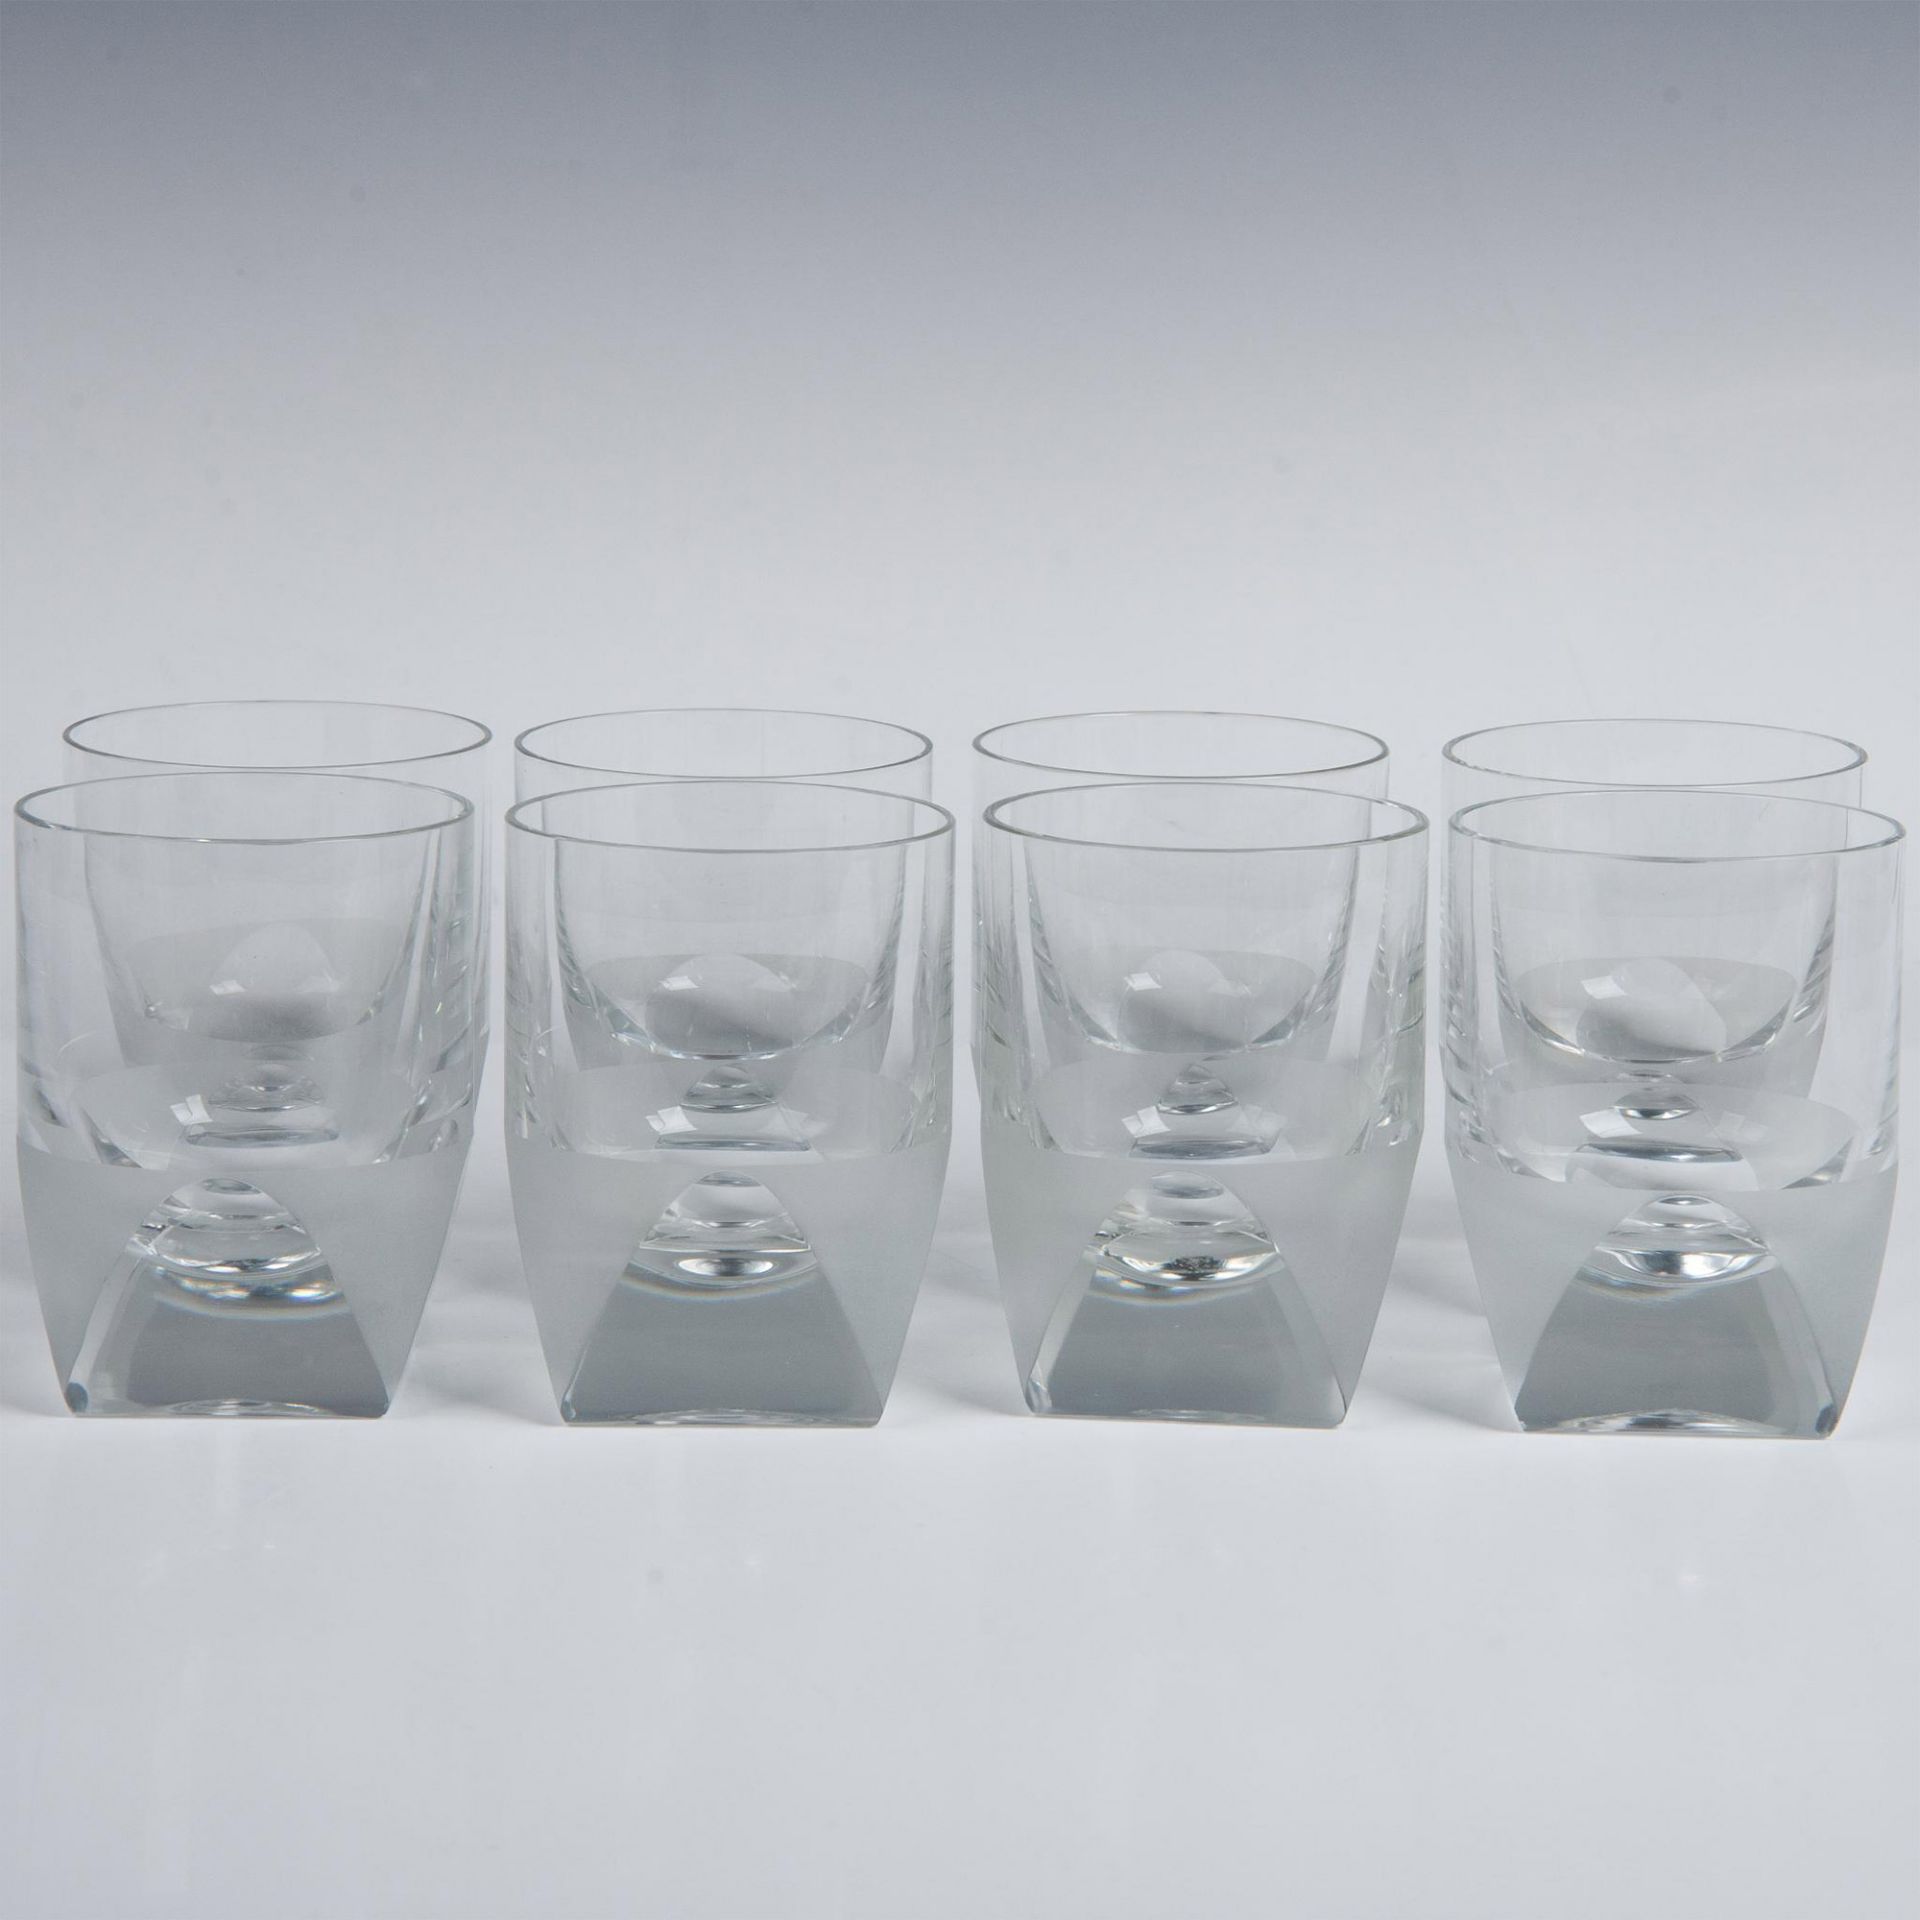 8pc Rosenthal Studio-Line Rocks Glasses, Skal Pattern - Image 4 of 9